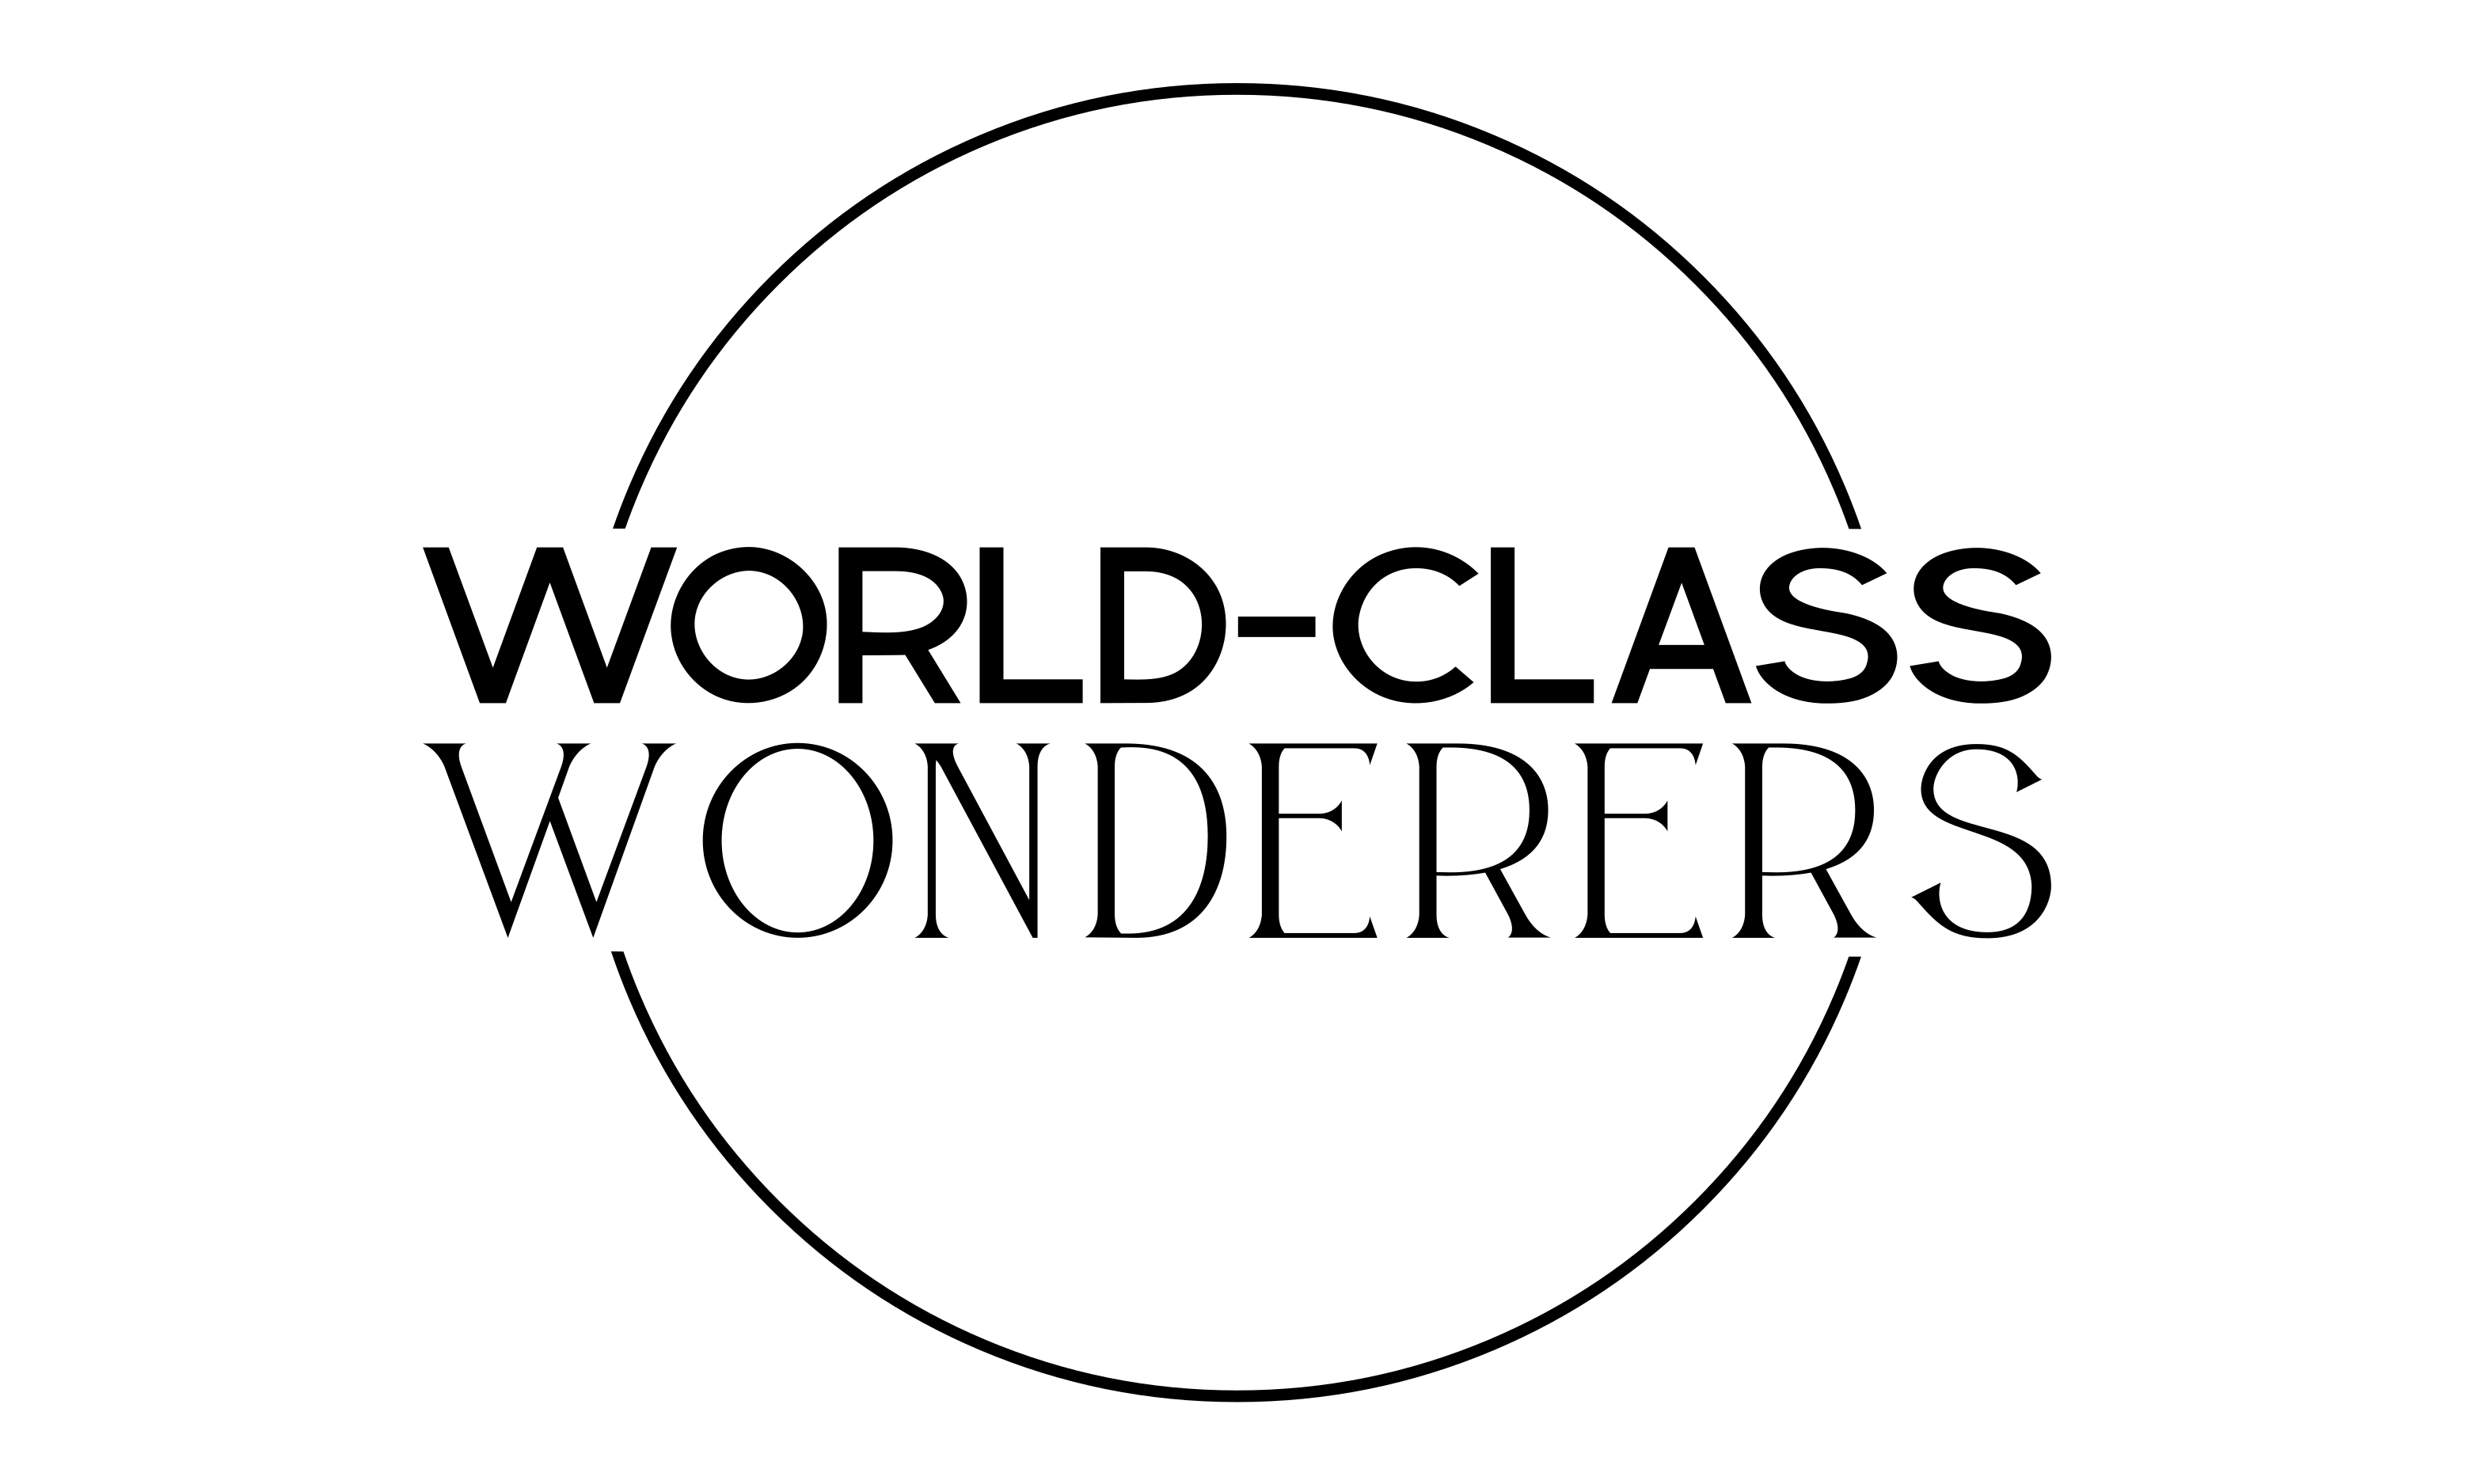 World Class Wonderers